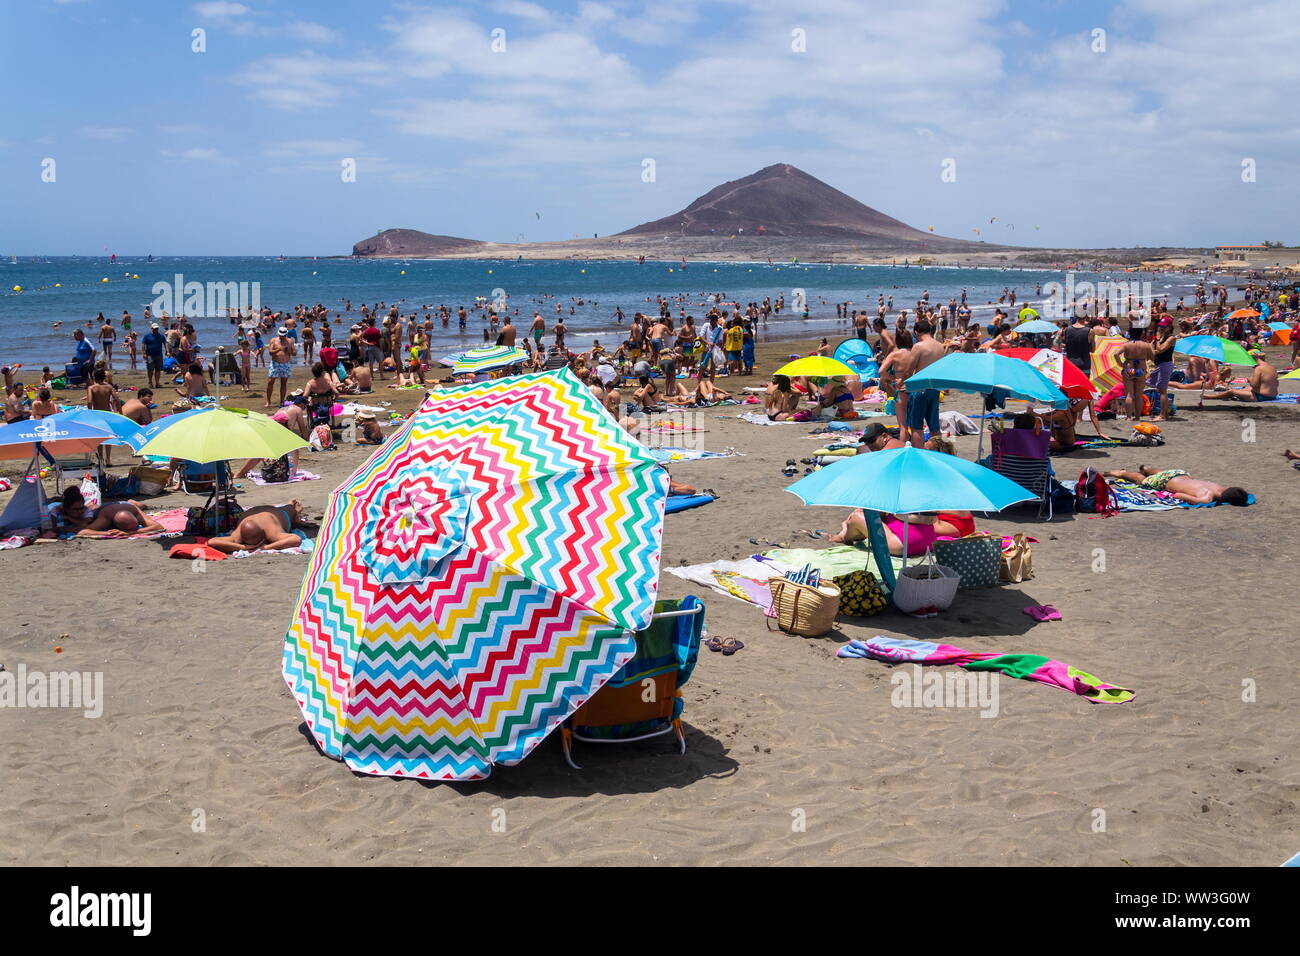 EL MEDANO, SPAIN - JULY 7 2019: People swimming and sunbathing on Playa El Medano beach on July 7, 2019 in El Medano, Spain. Stock Photo